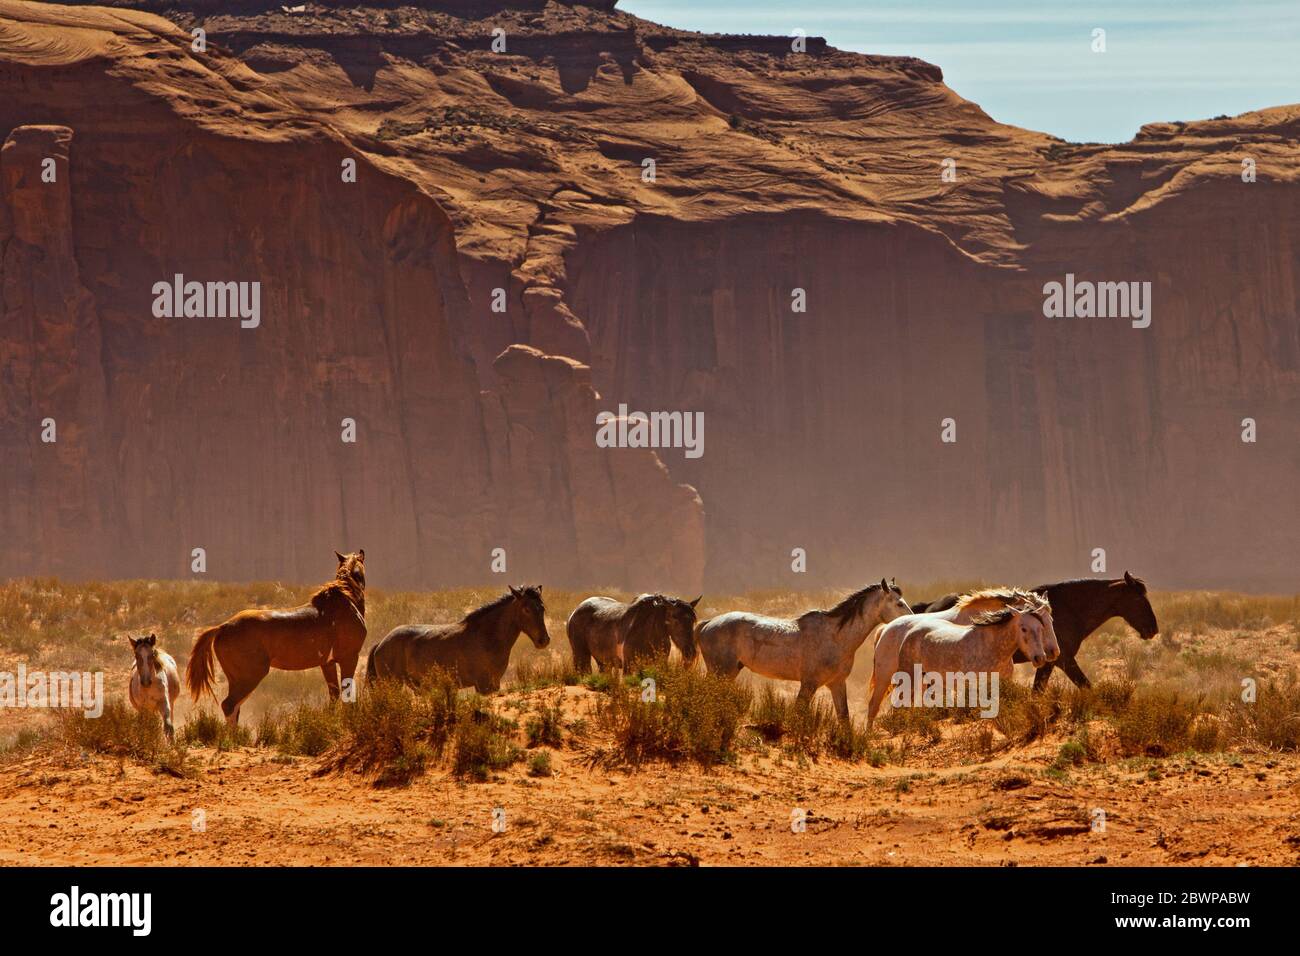 Wild horses walking through the desert in southern Utah, United States. Stock Photo